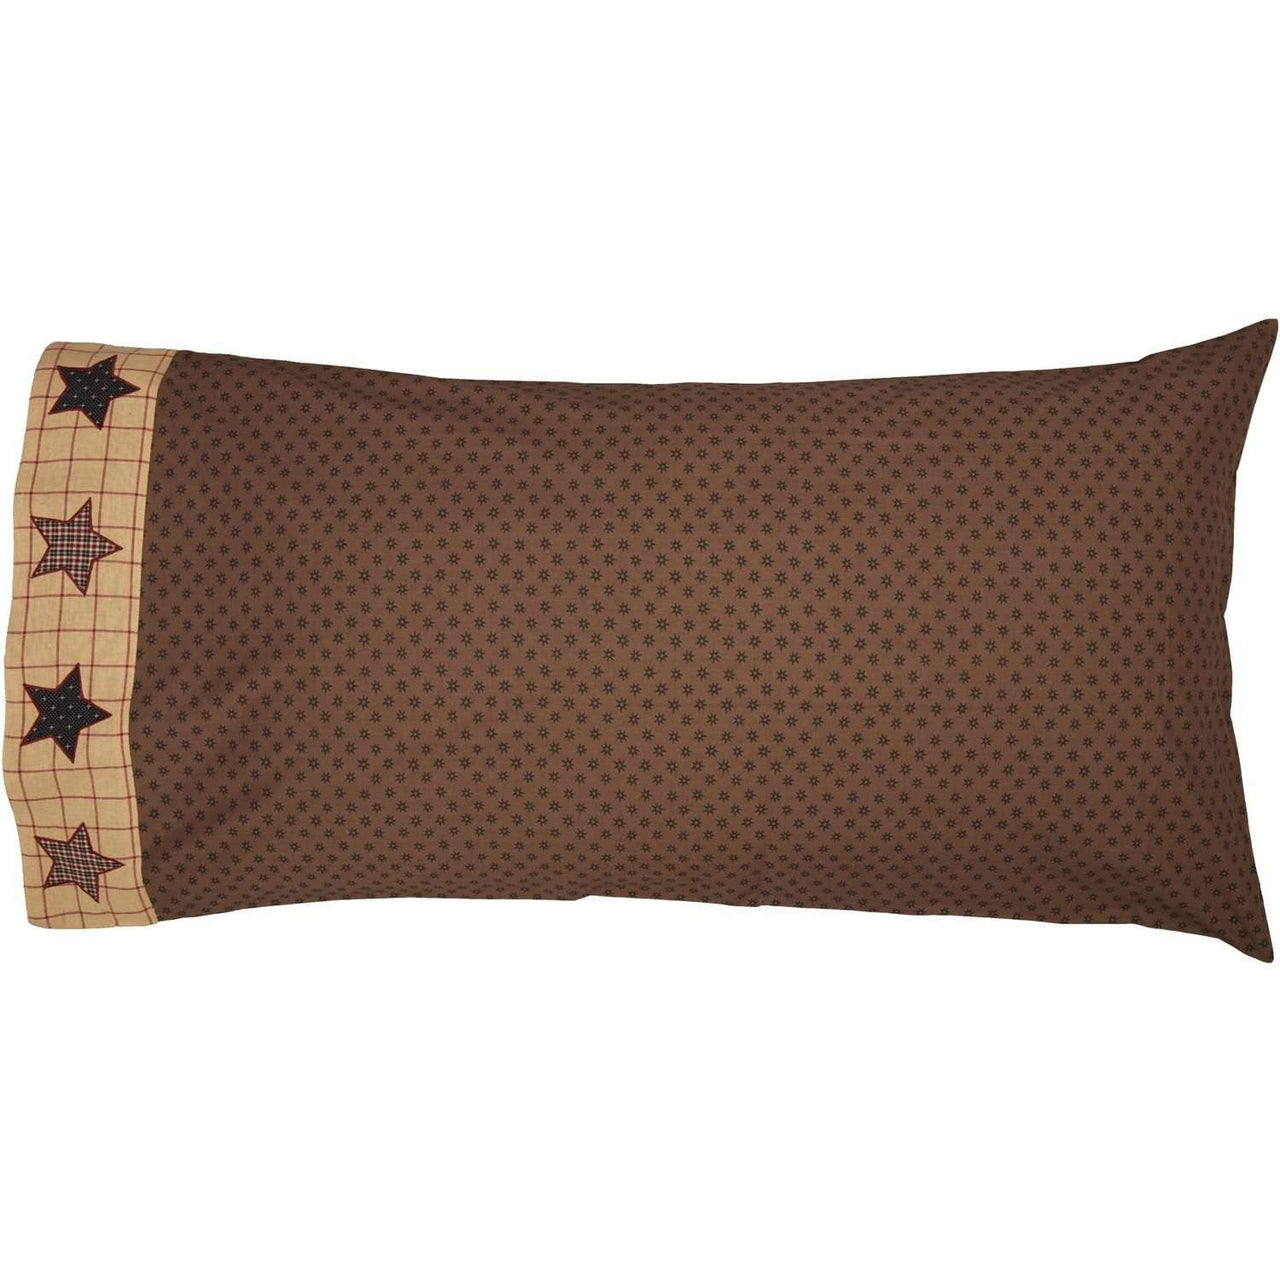 Bingham Star King Pillow Case Set of 2 21x40 VHC Brands - The Fox Decor